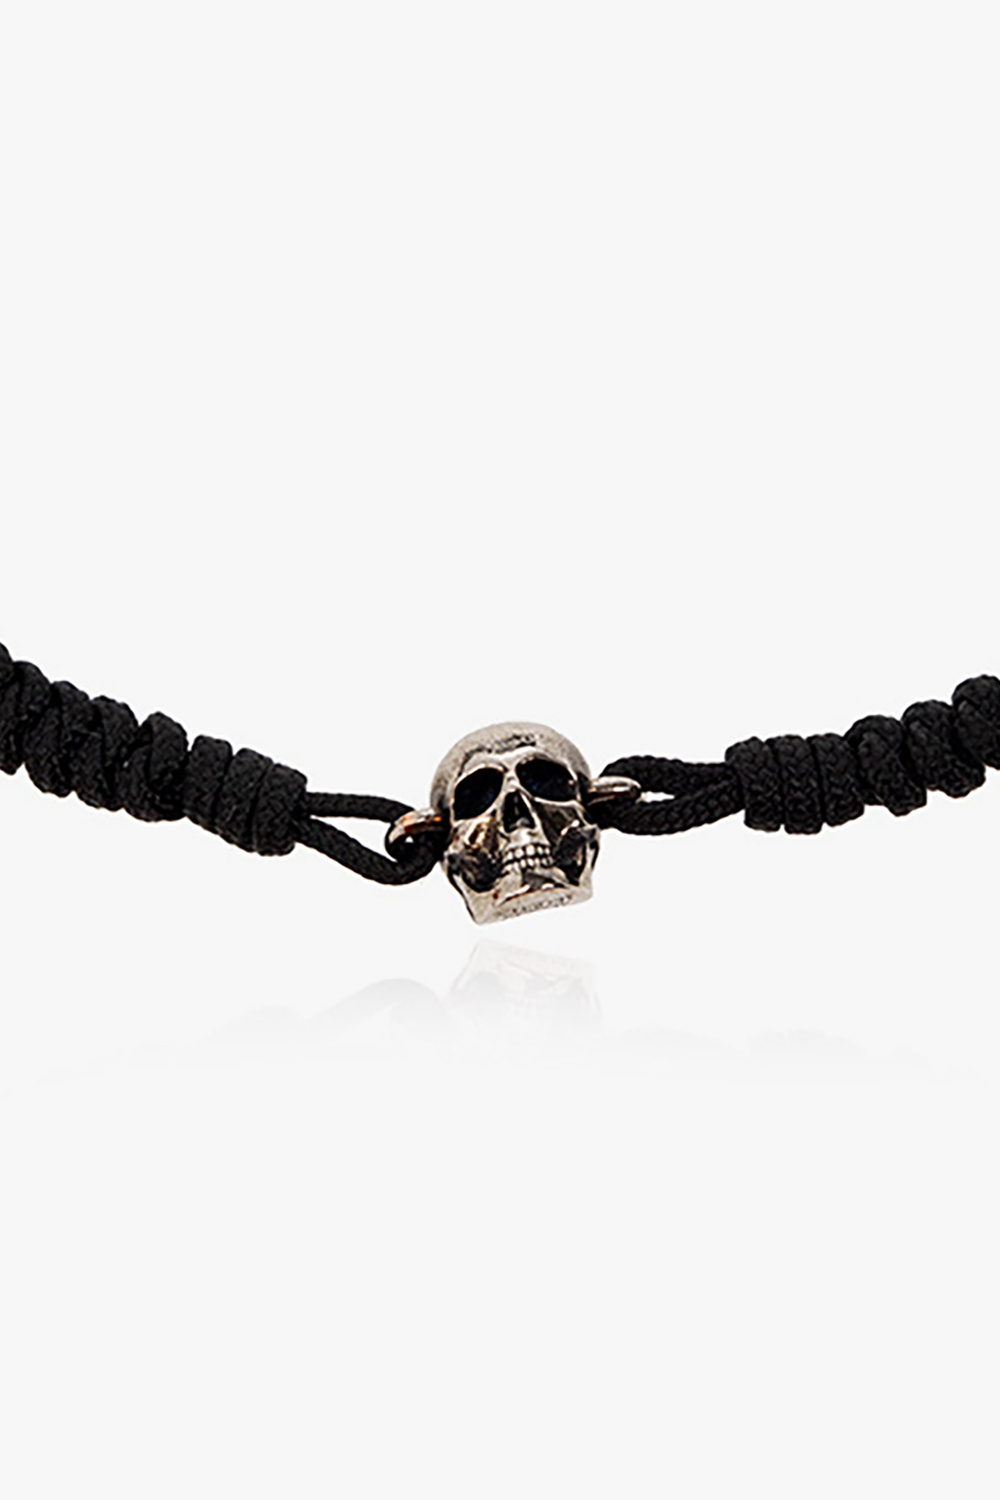 Alexander McQueen Black Cord Skull Bracelet 'Natural/A Silve'  RvceShops -  7058461AAIK8560 - Alexander McQueen MEN SHOES TRAINERS